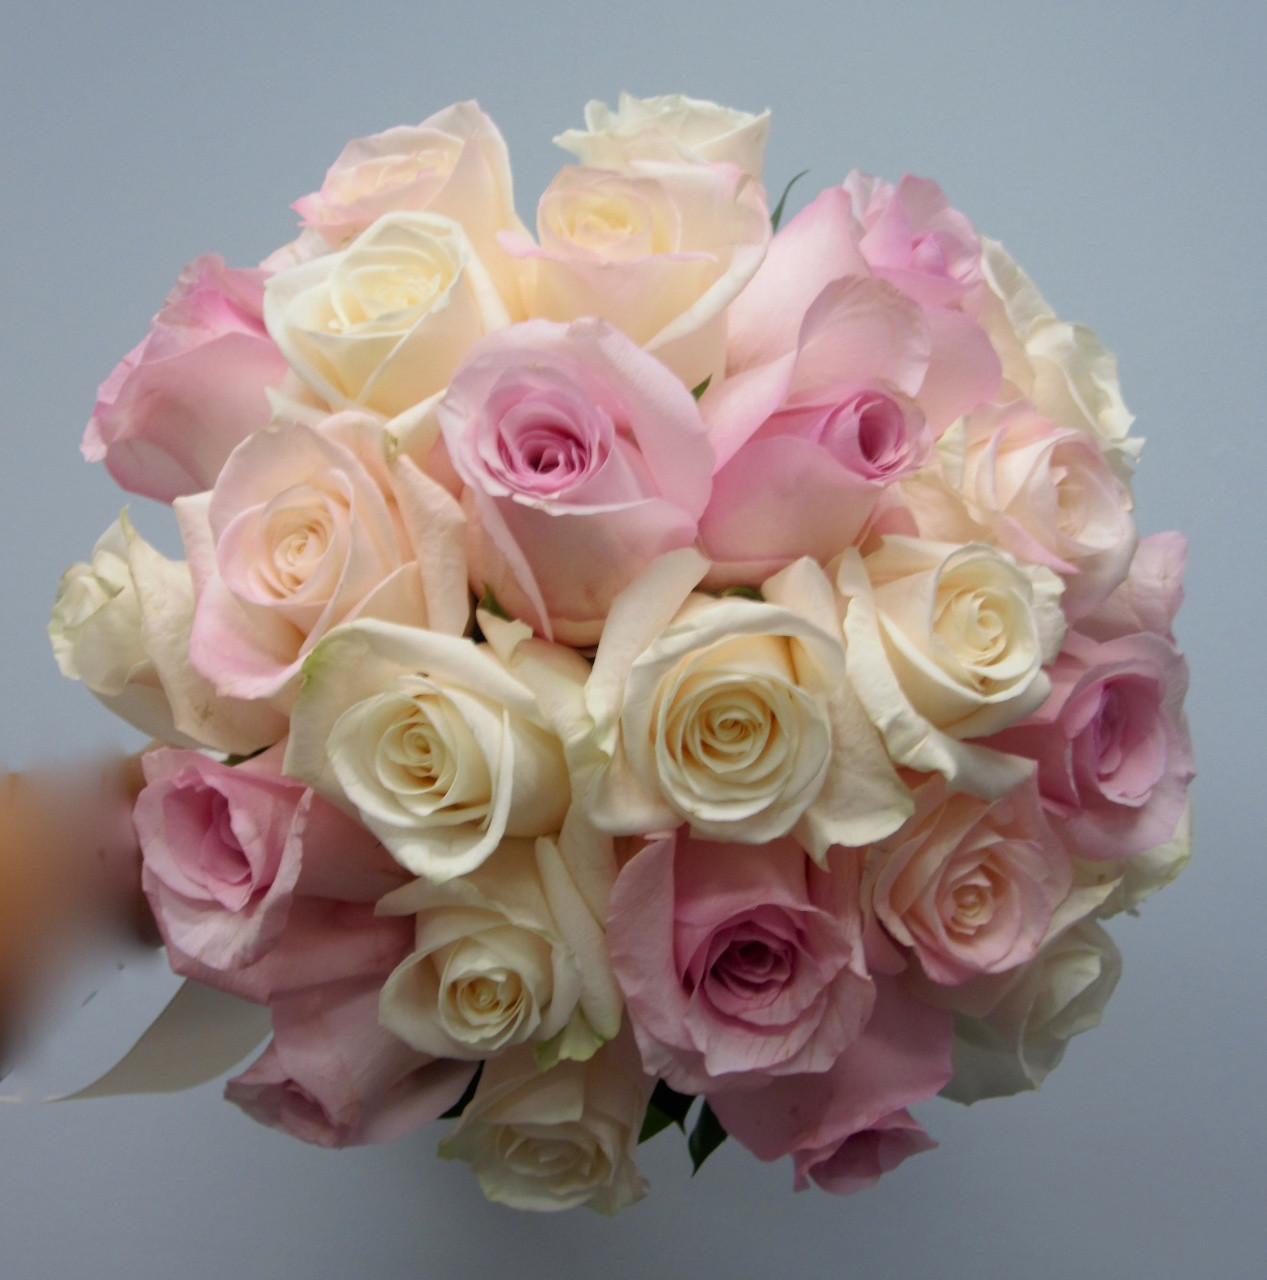 Need Help Choosing a Bouquet 2